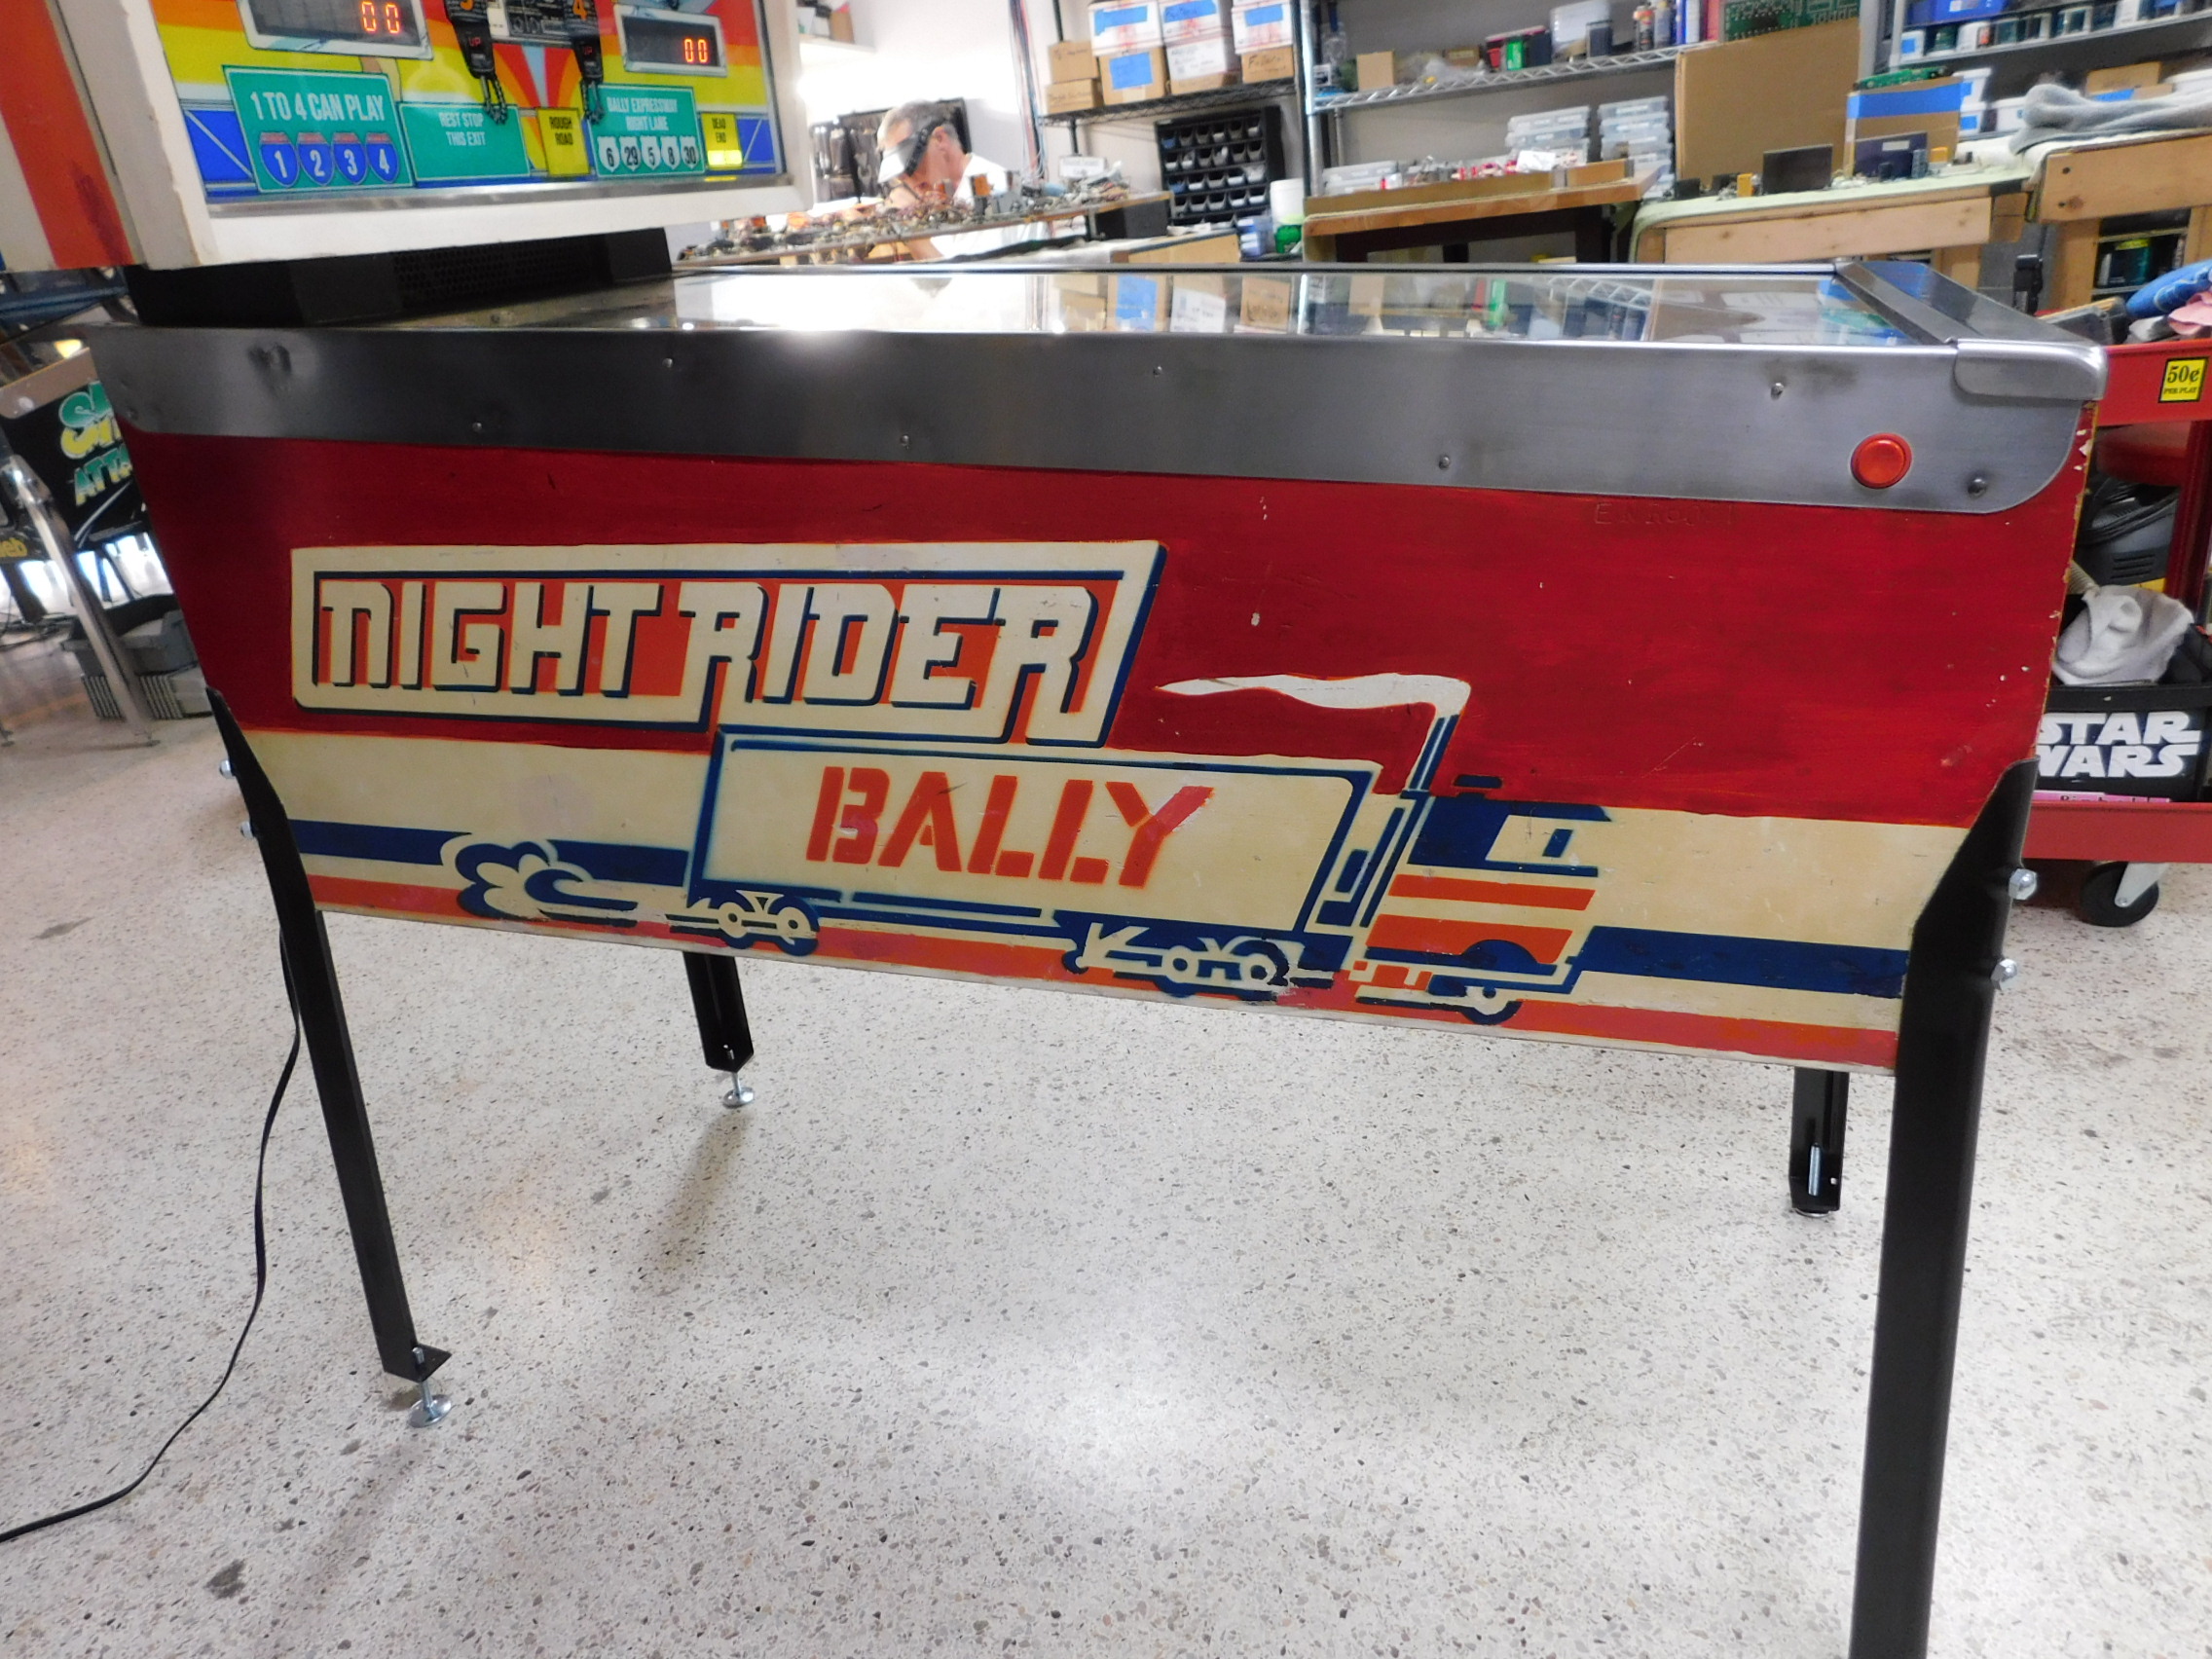 Bally Night Rider